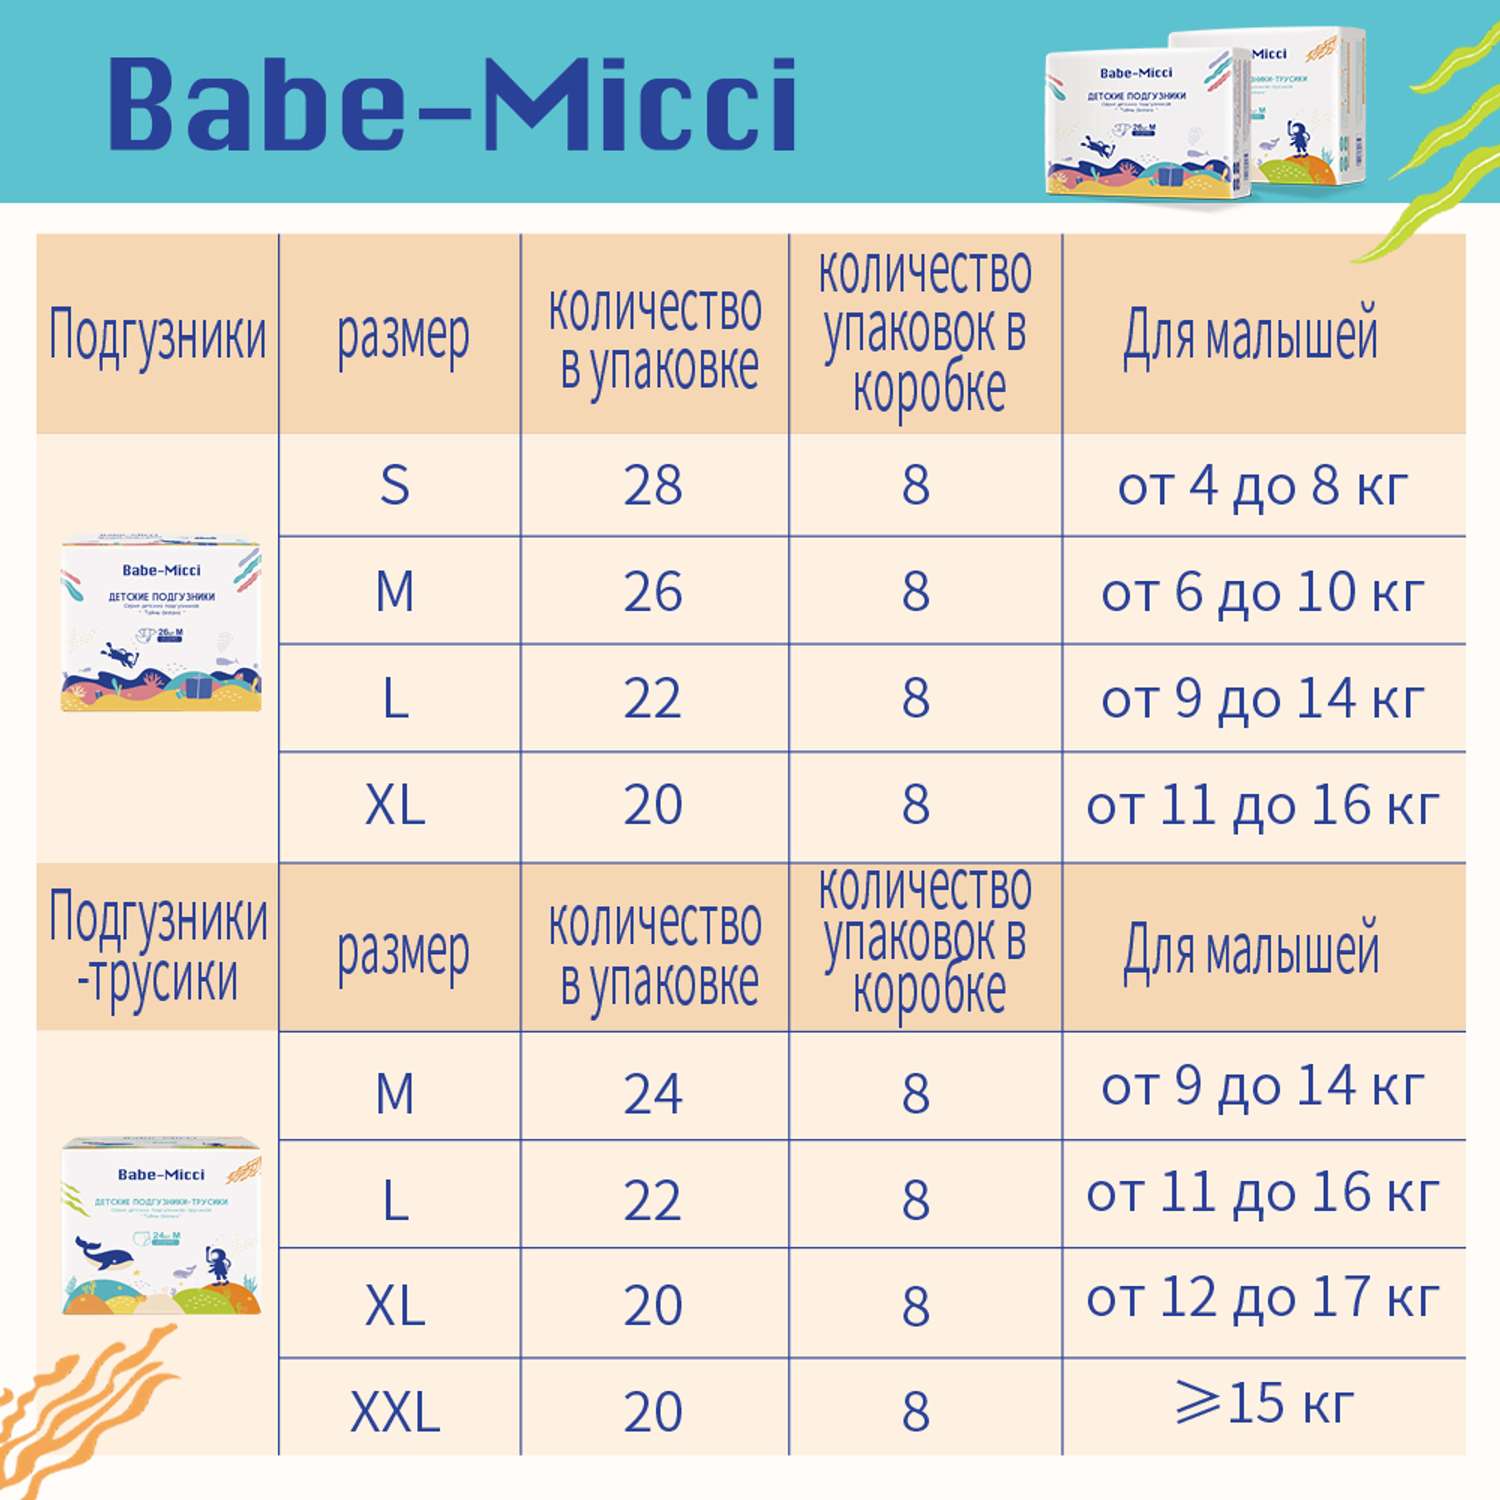 Подгузники детские Babe-Micci 6-11 кг размер M 26 шт - фото 3